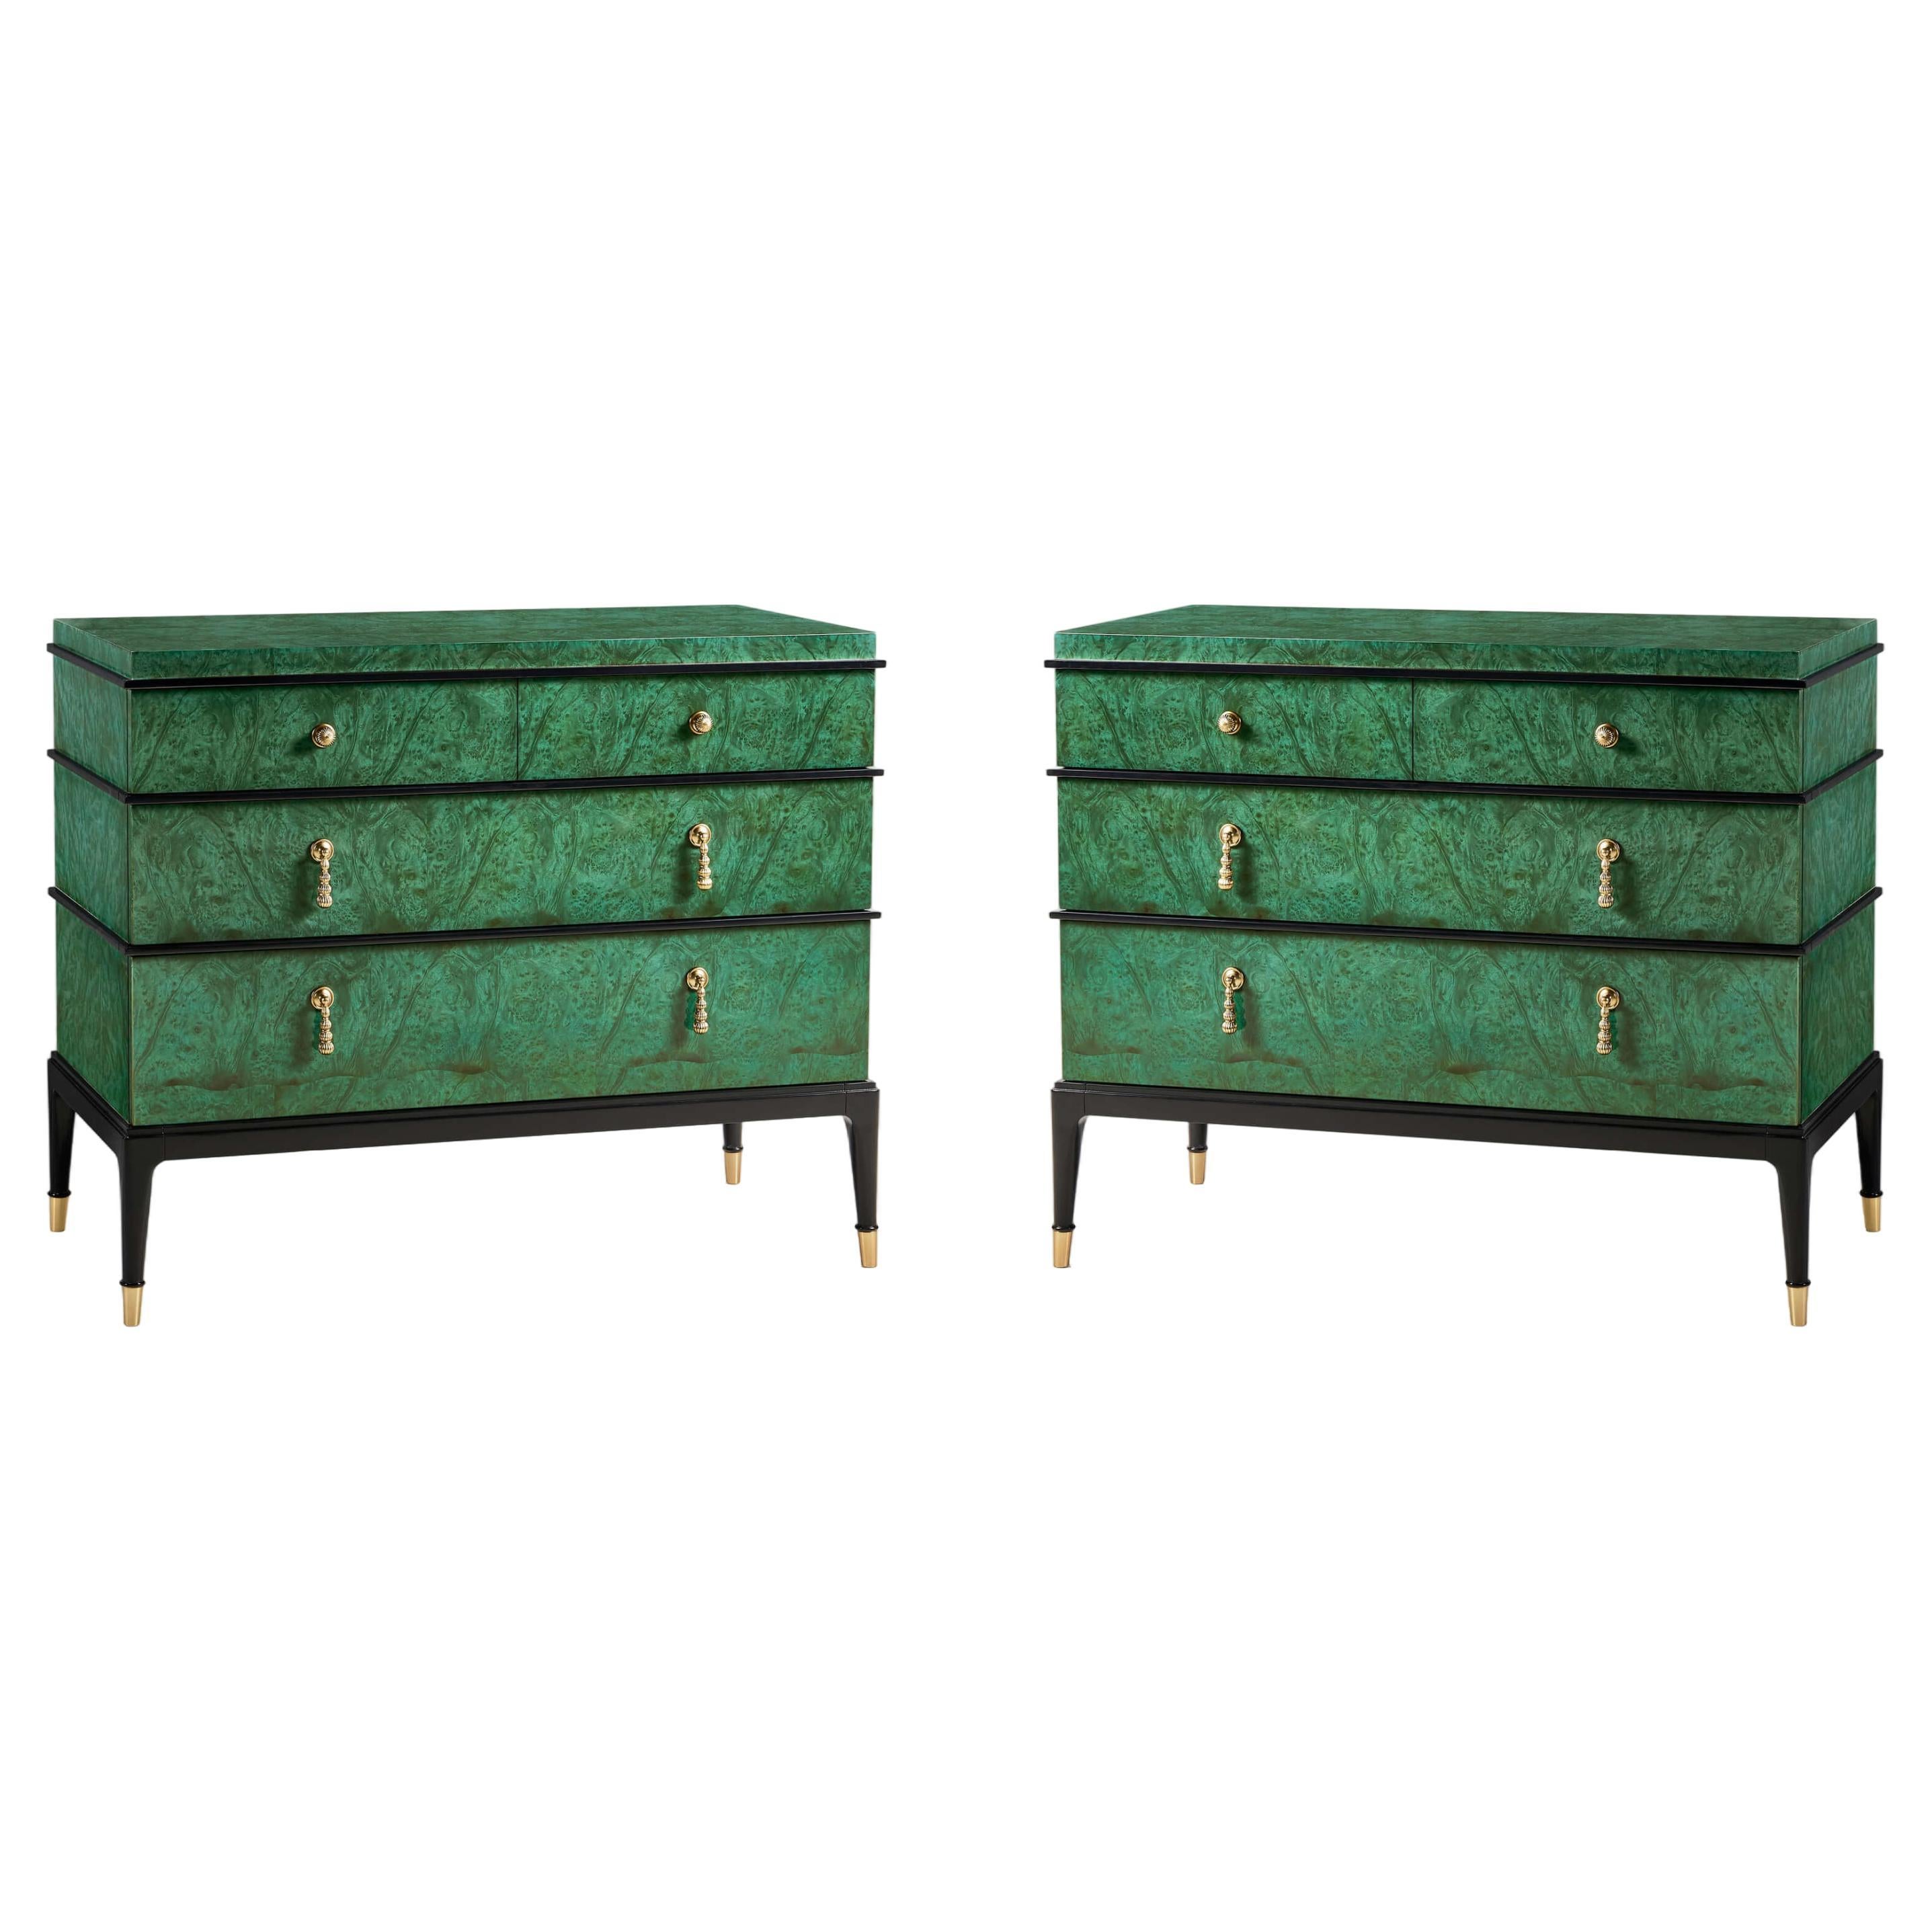 Pair of Emerald Art Deco Style Burl Wood Dressers